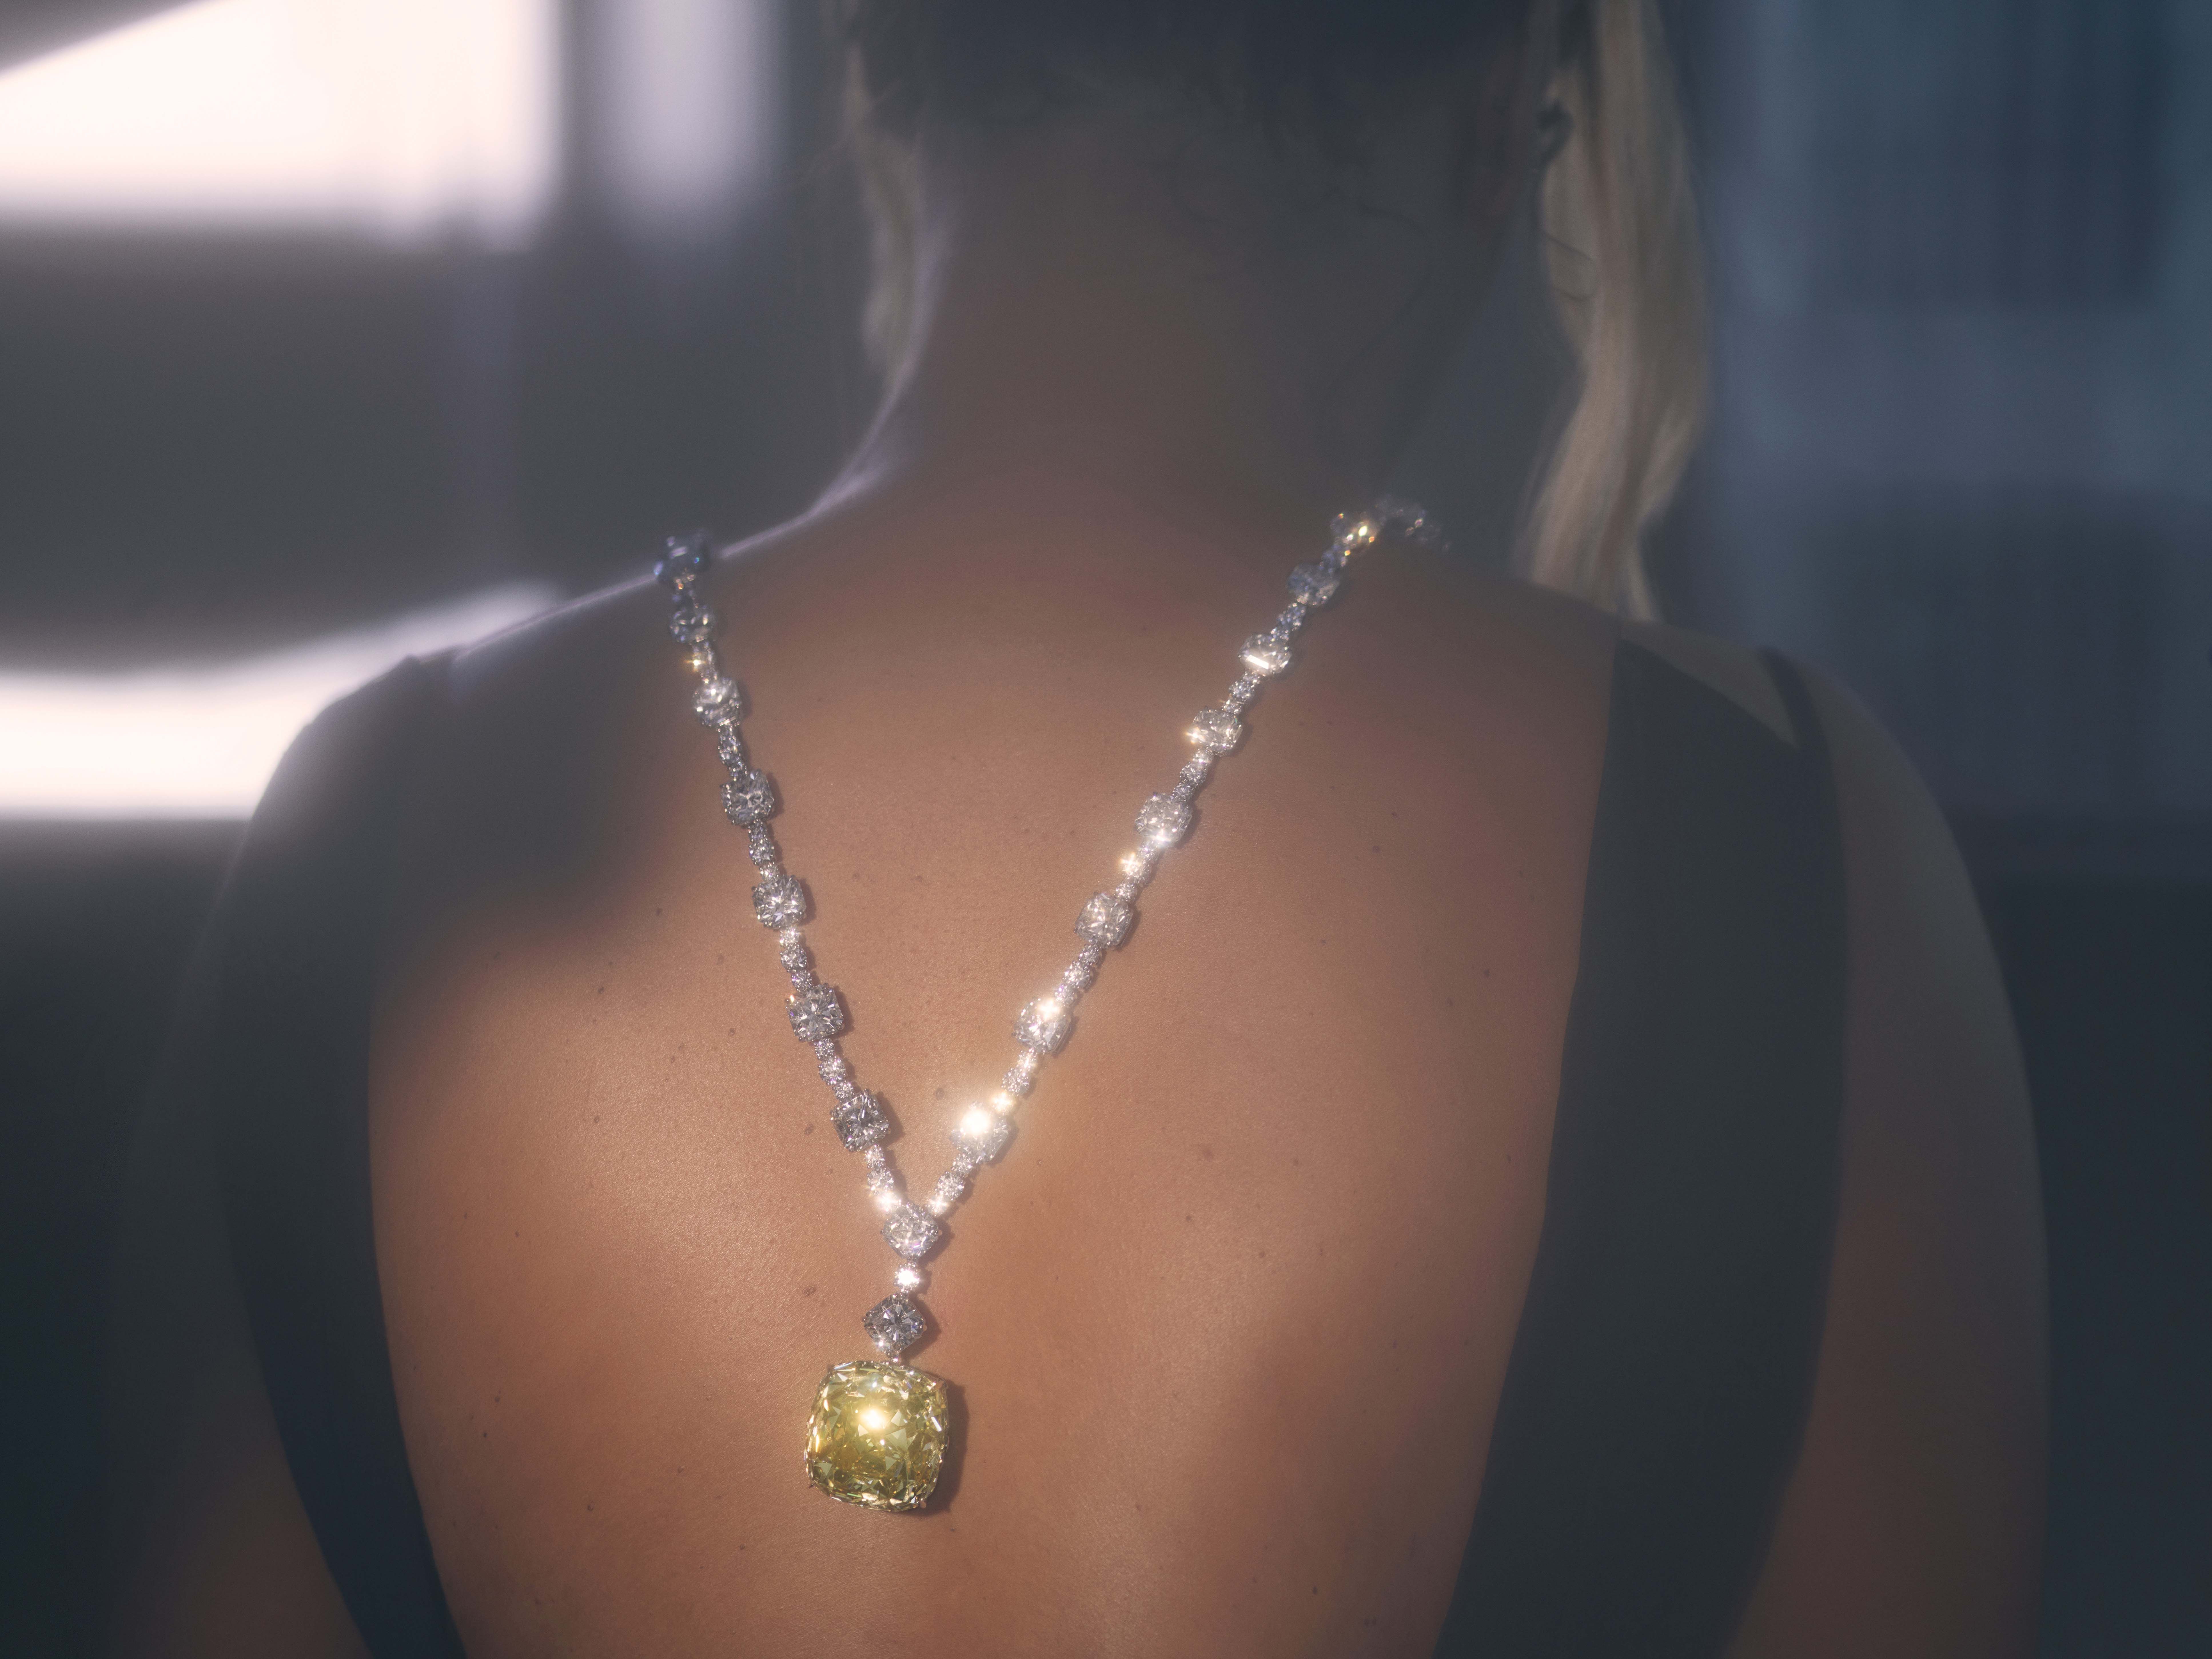 Beyoncé's Tiffany & Co diamond necklace is worth $30 million